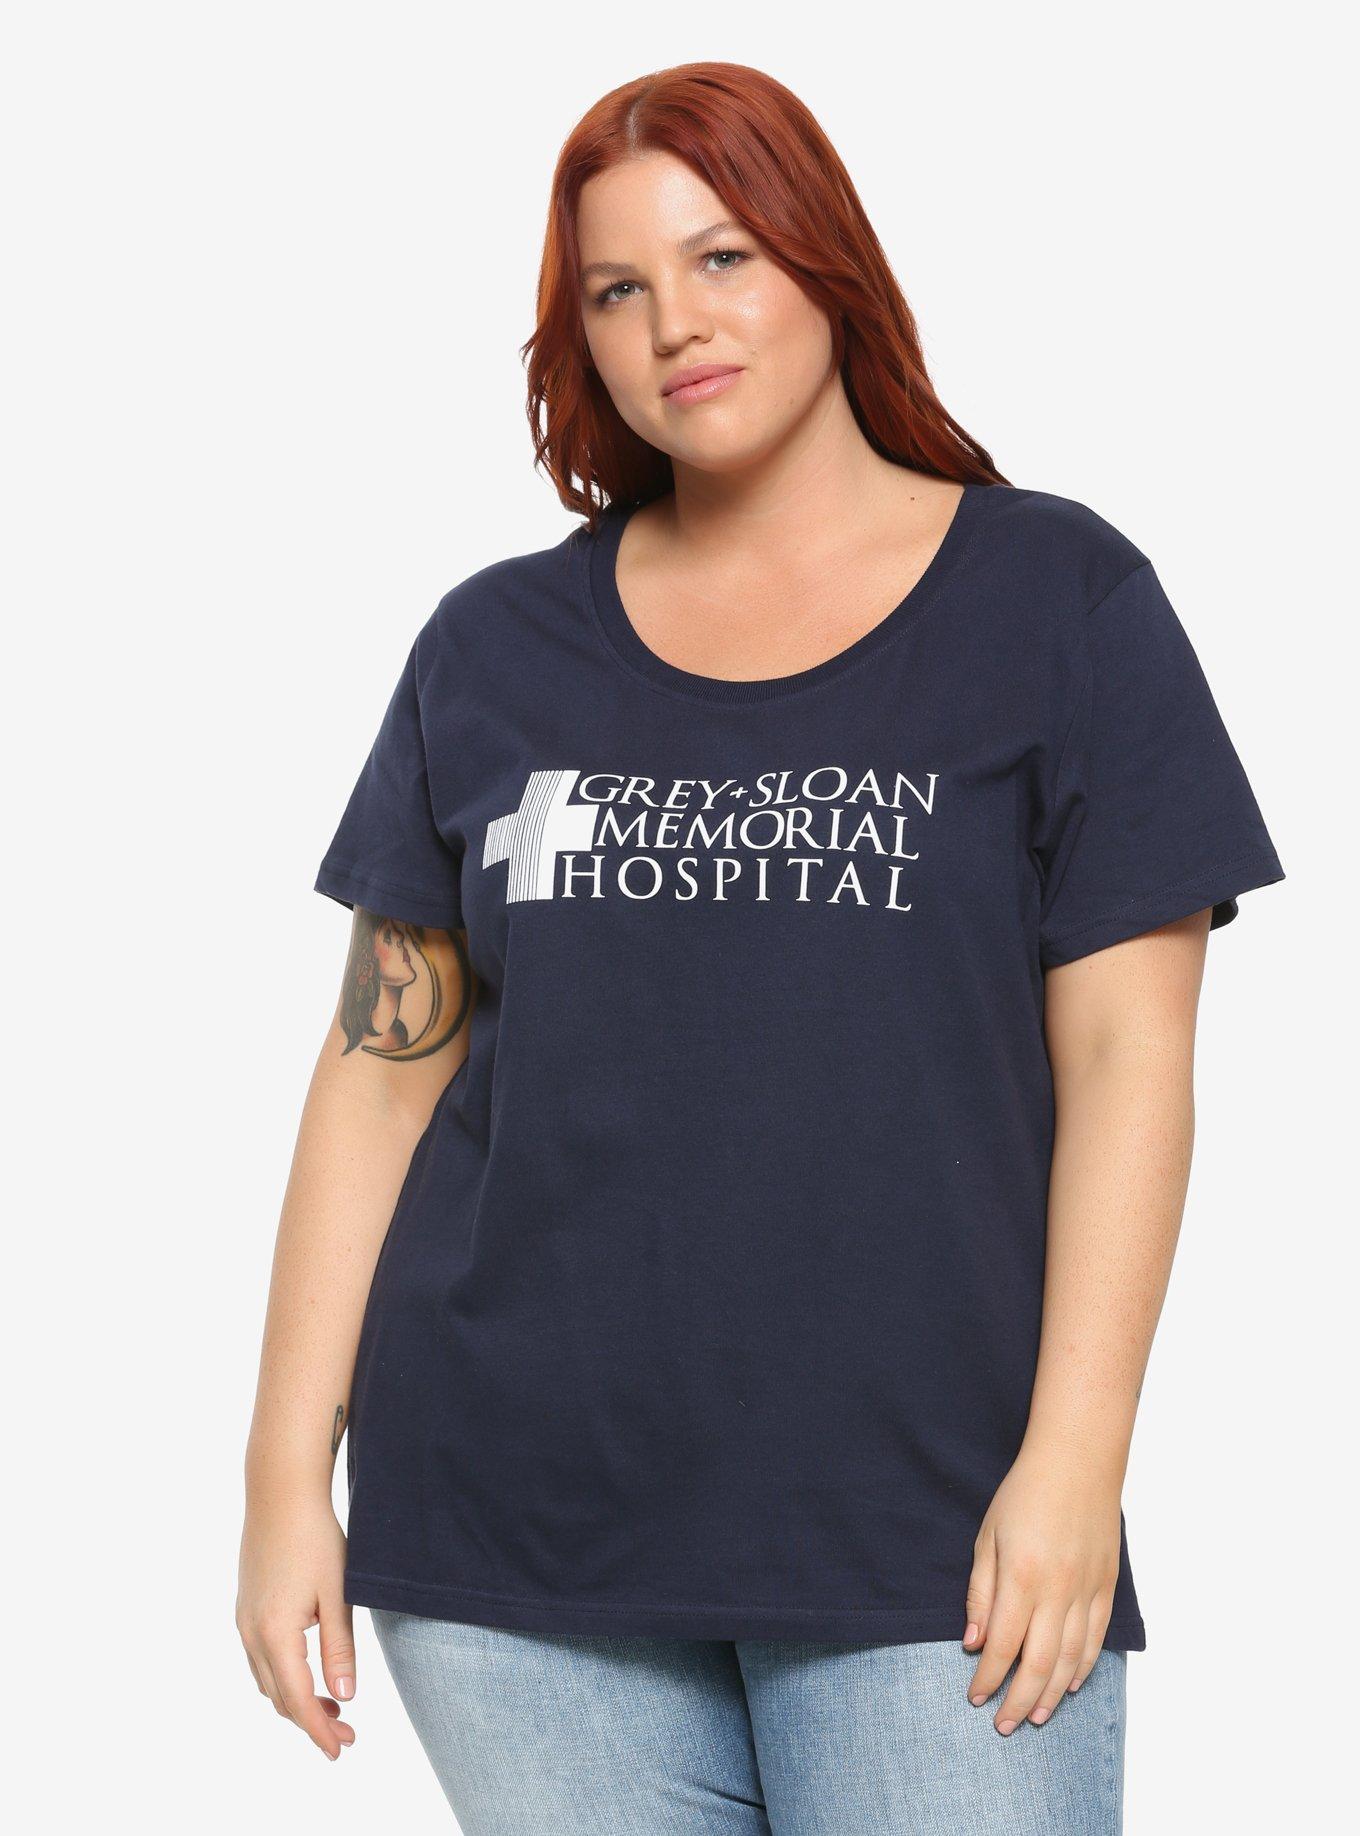 Grey's Anatomy Grey Sloan Memorial Hospital Girls T-Shirt Plus Size, WHITE, hi-res